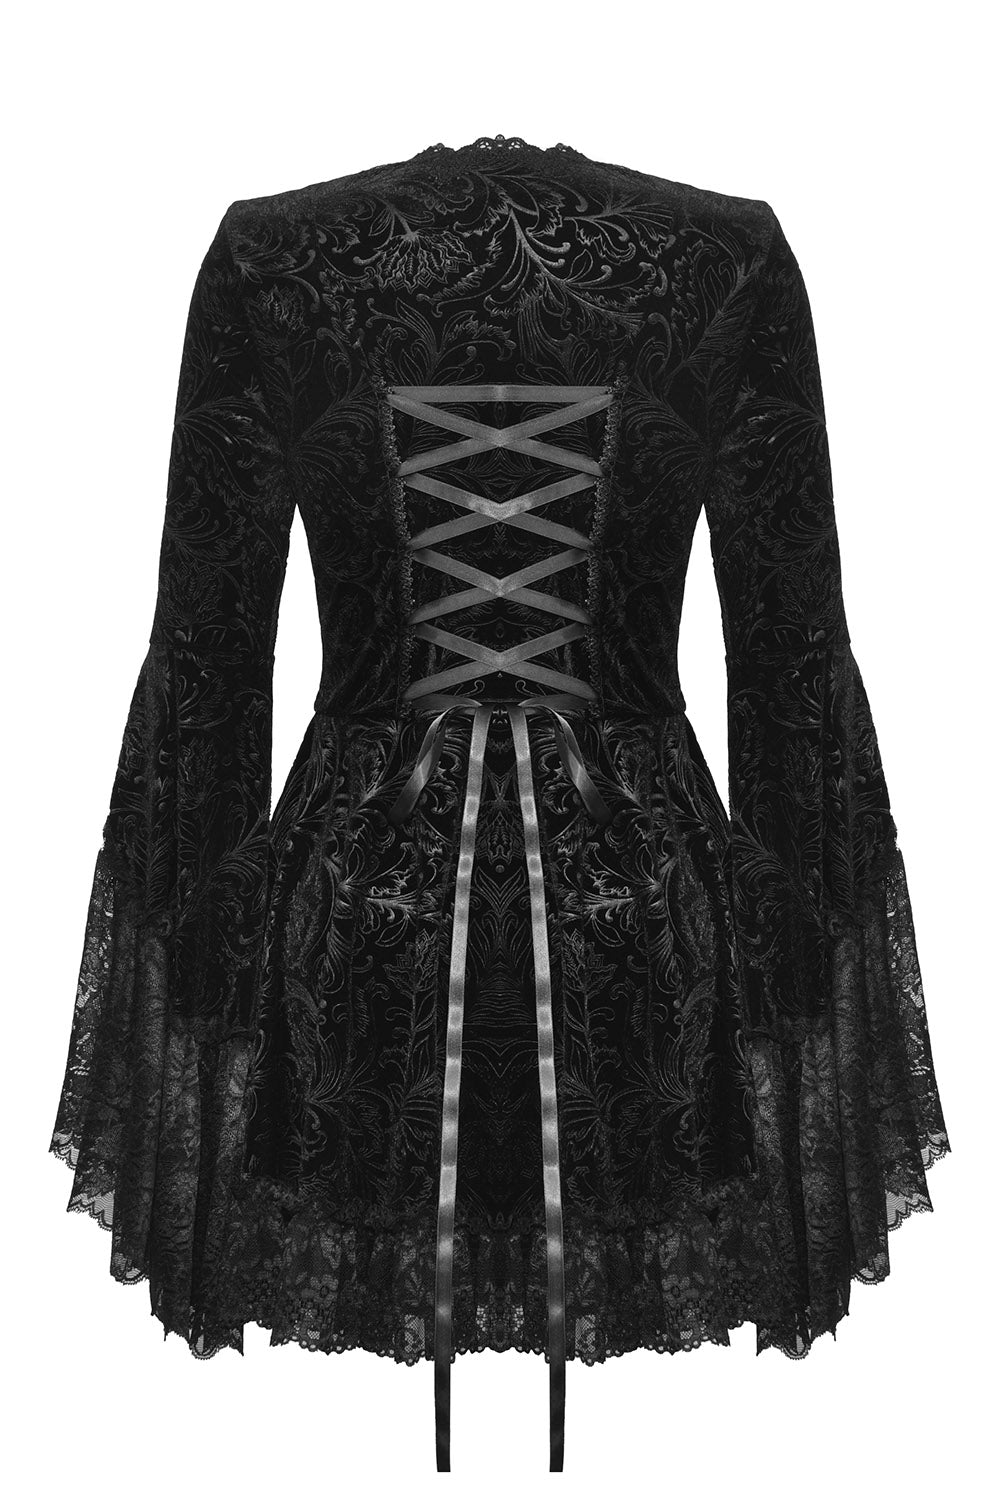 womens elegant romantic gothic style short dress